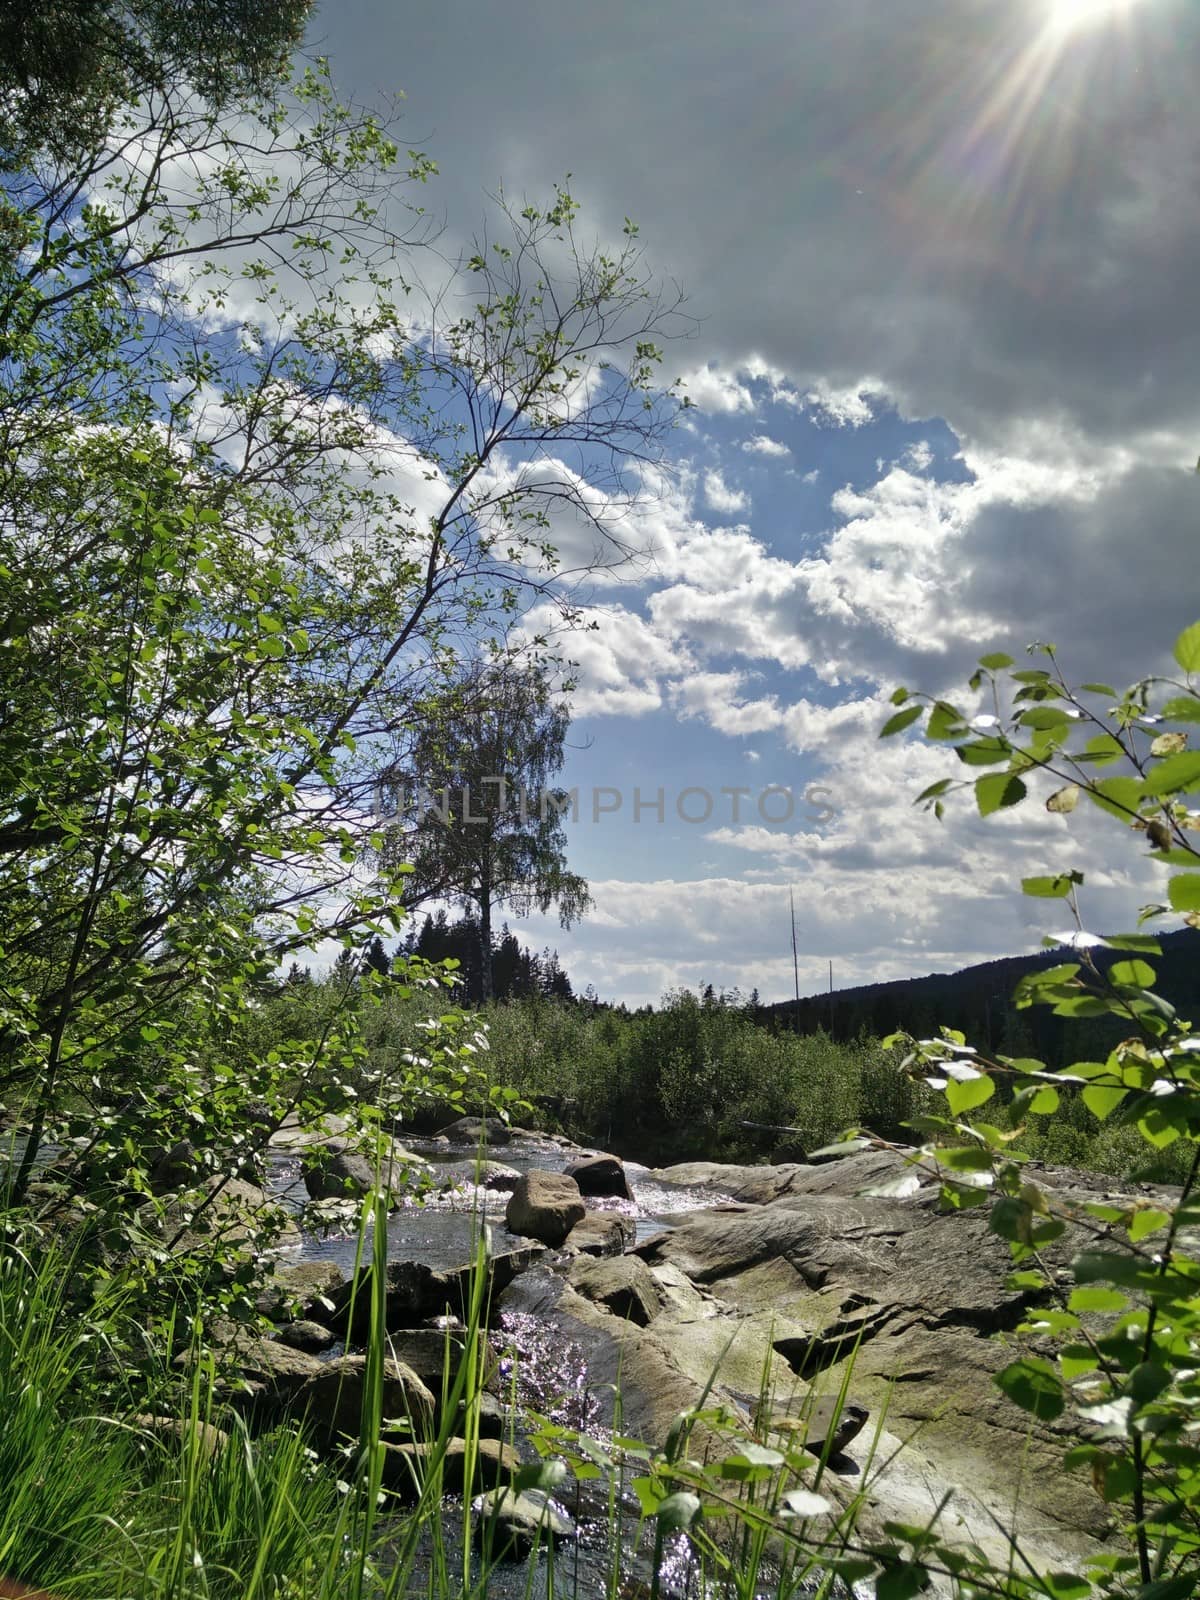 Waterfall in Norway by haawri